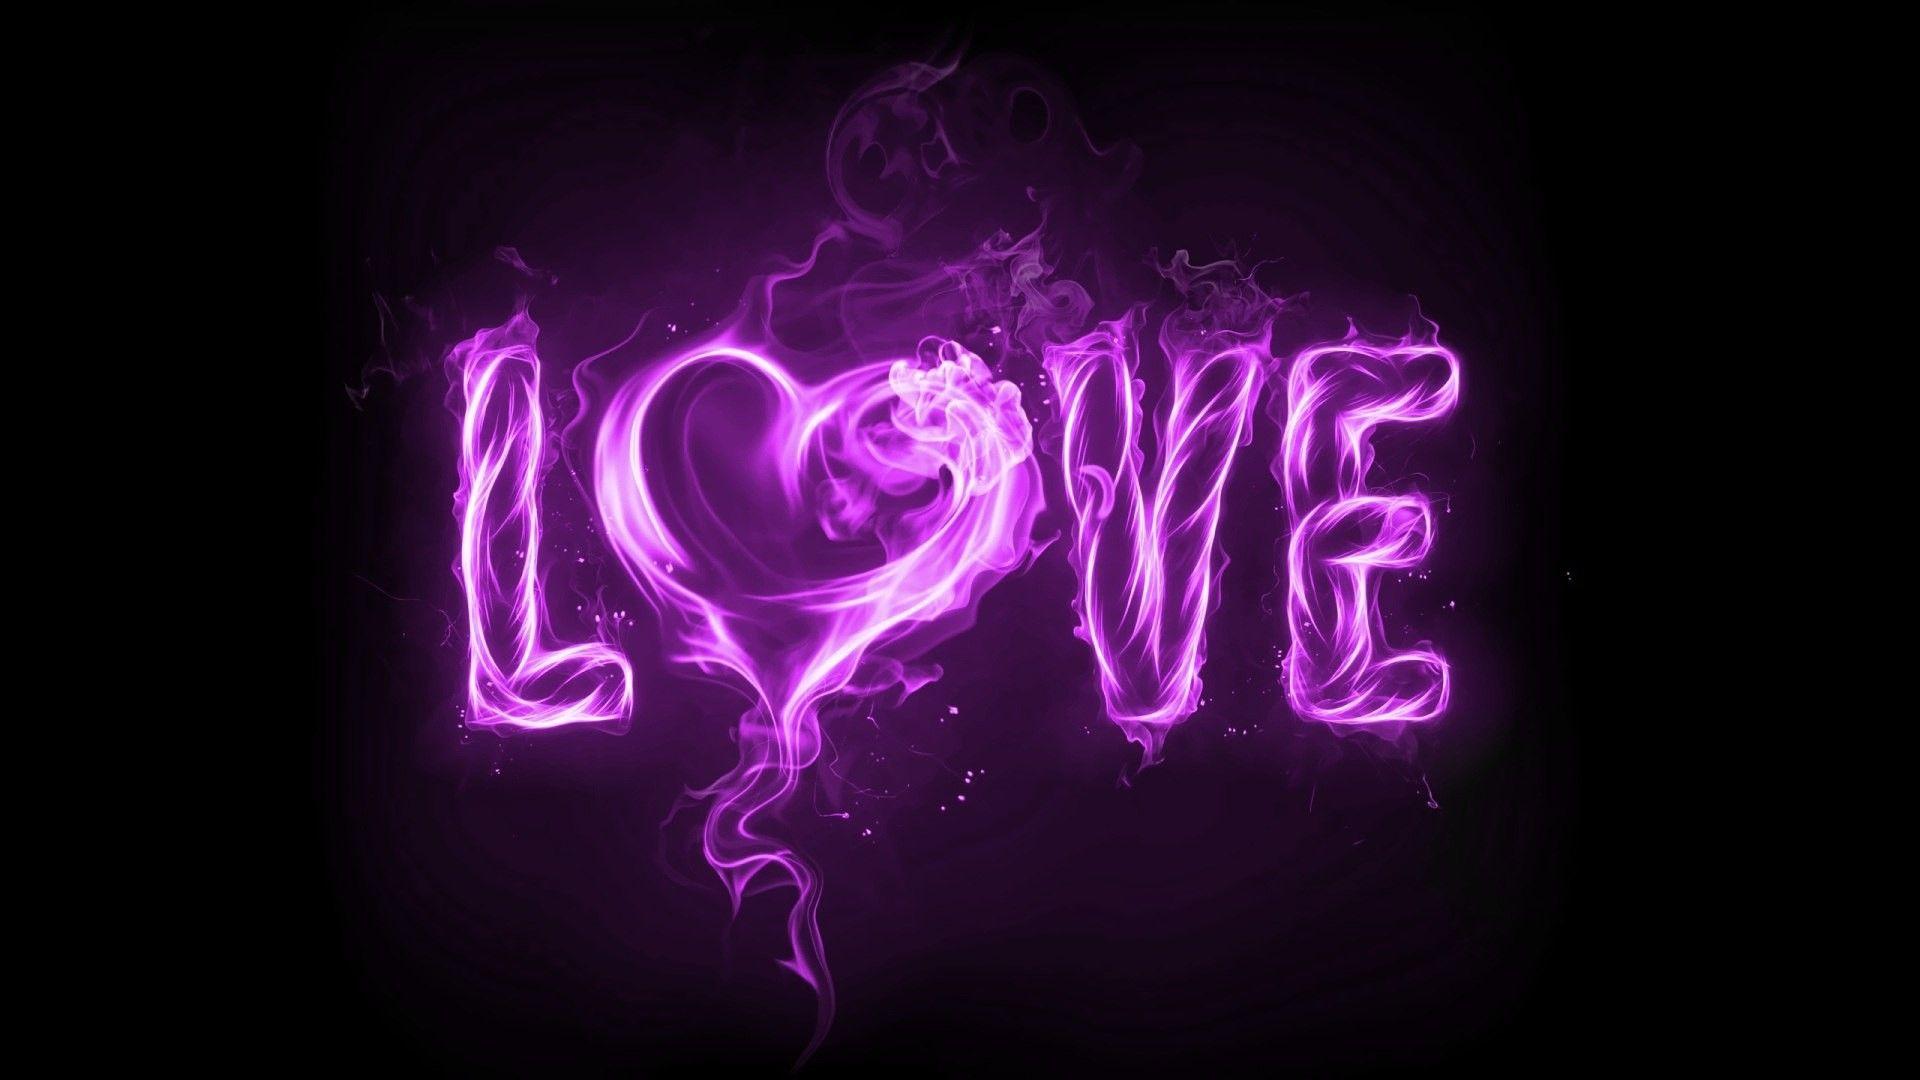 Purple Heart Black Background